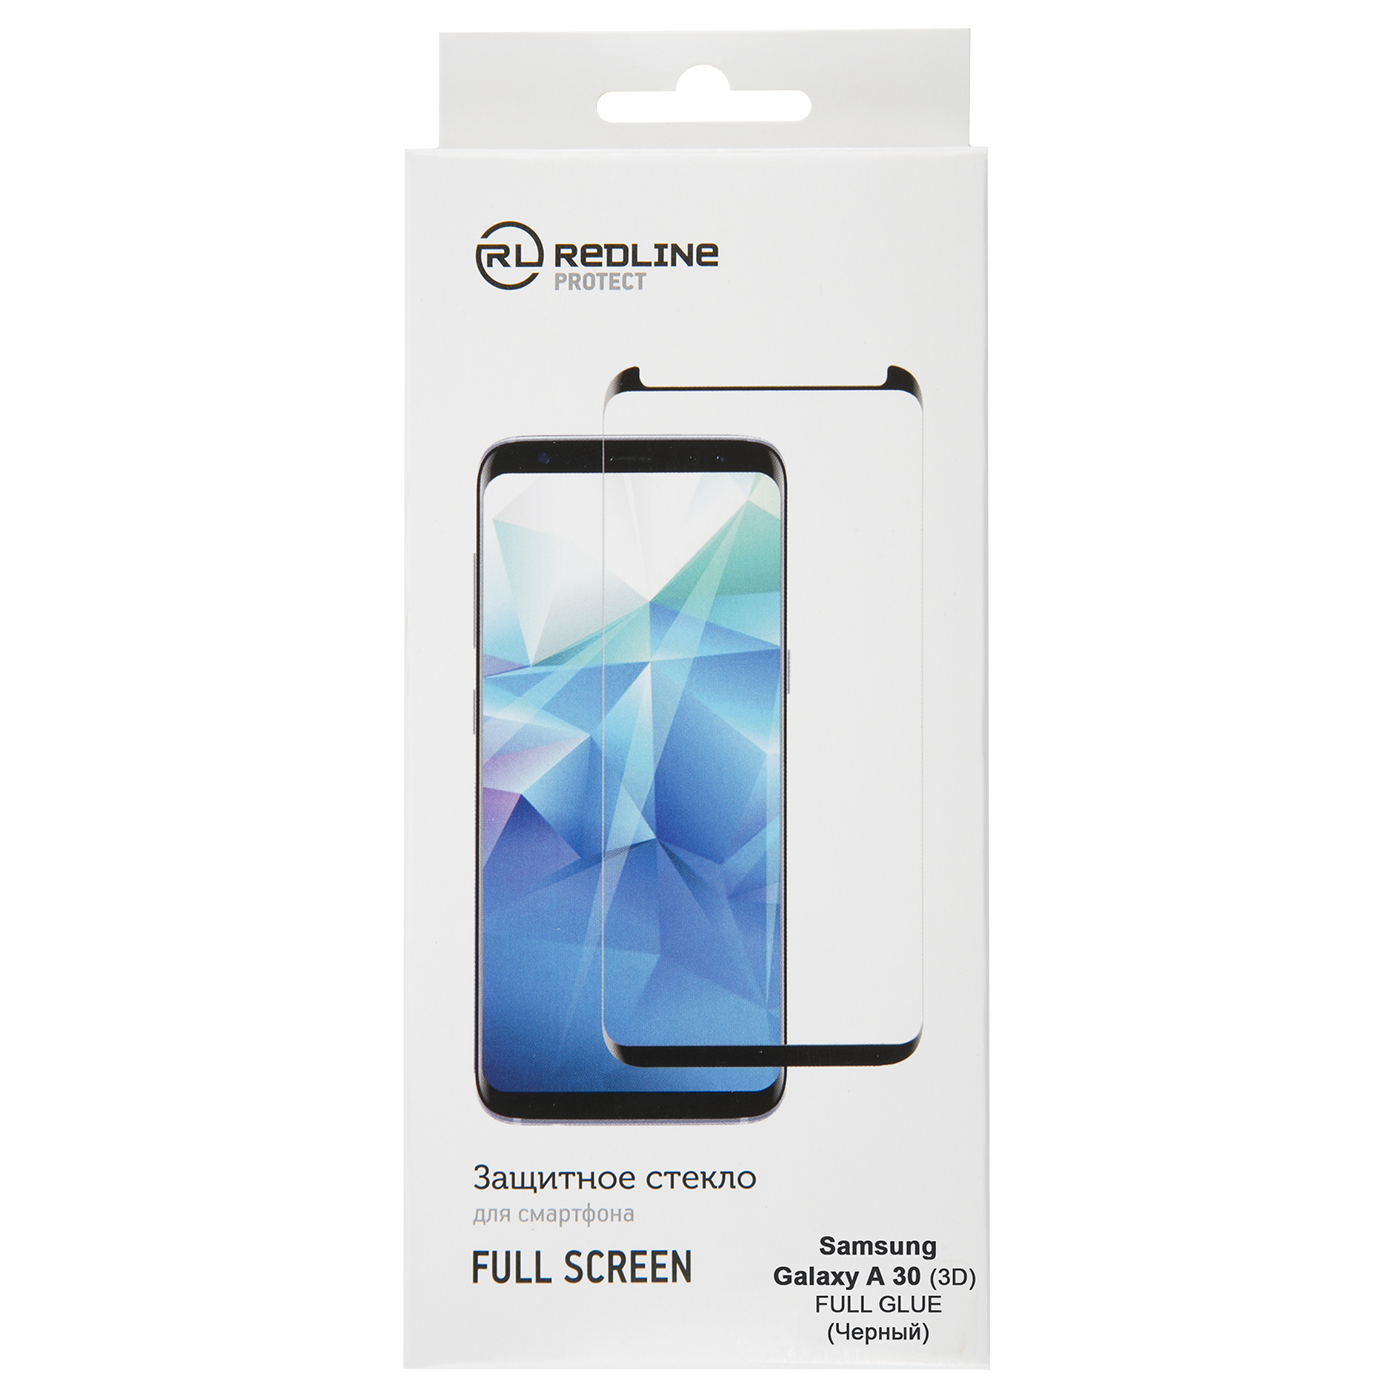 Защитный экран Samsung Galaxy A30 Full Screen (3D) tempered glass FULL GLUE